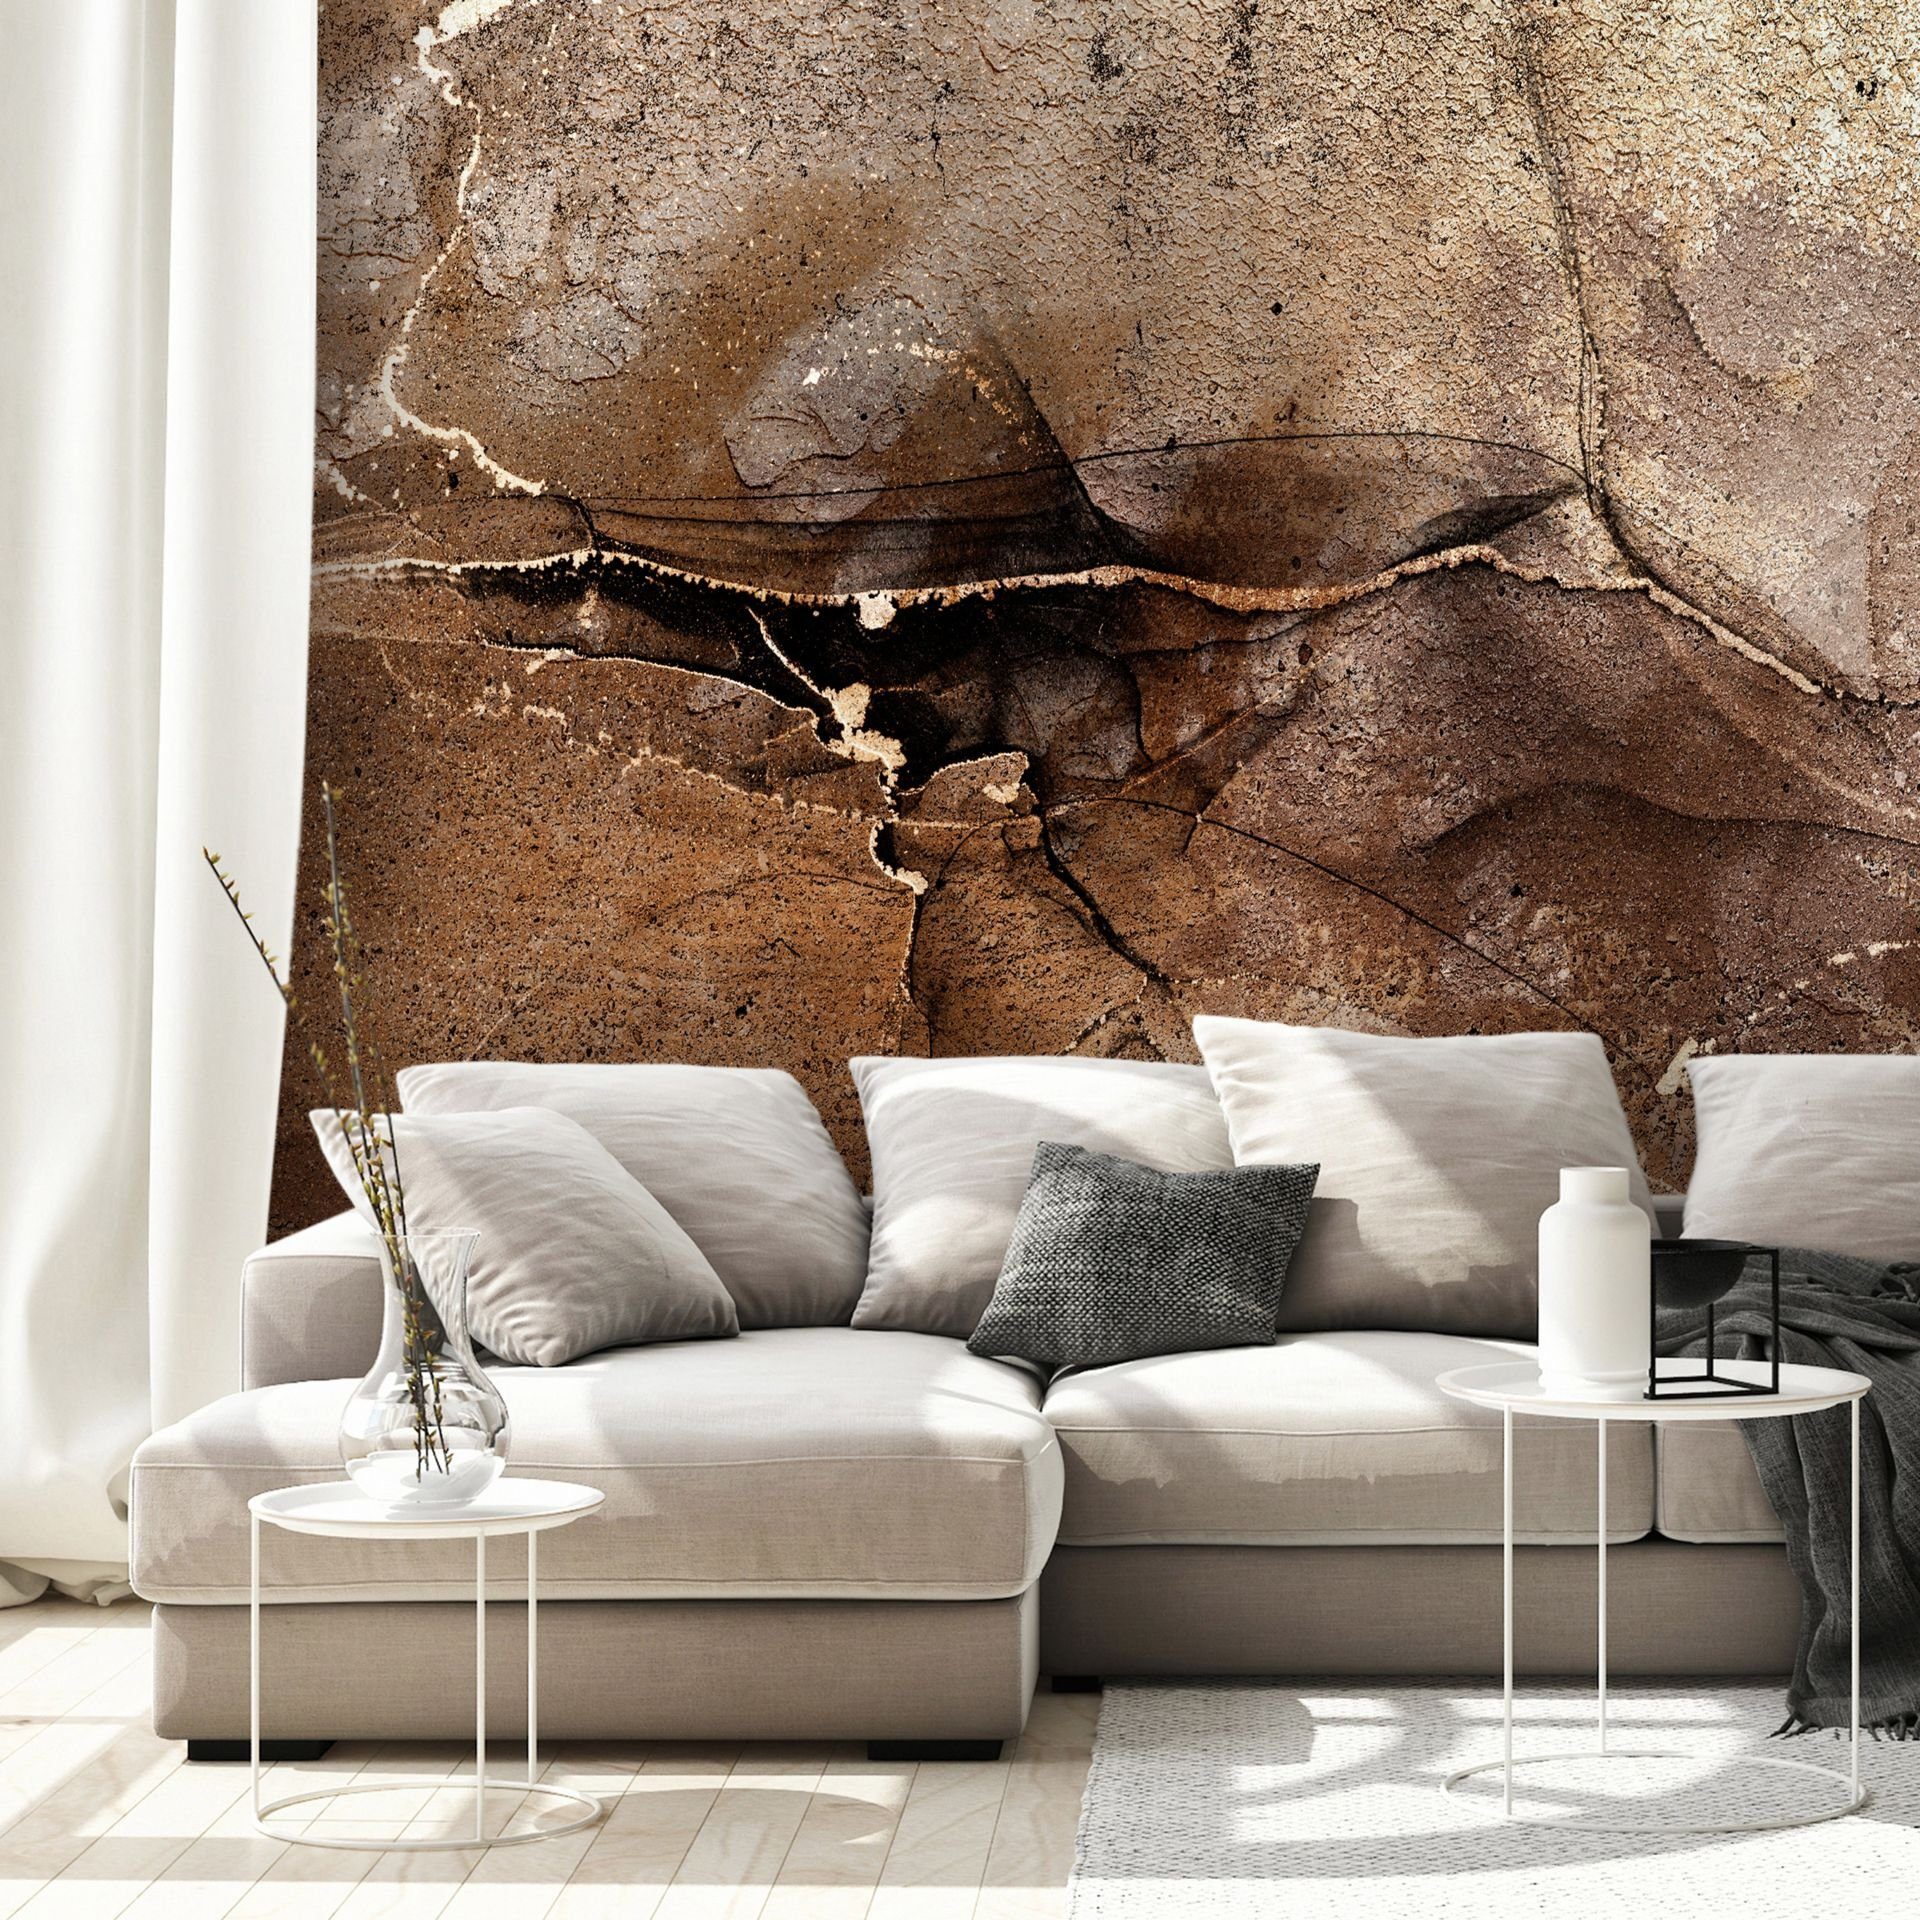 KUNSTLOFT Vliestapete Rock Abstraction 0.98x0.7 m, matt, lichtbeständige Design Tapete | Vliestapeten